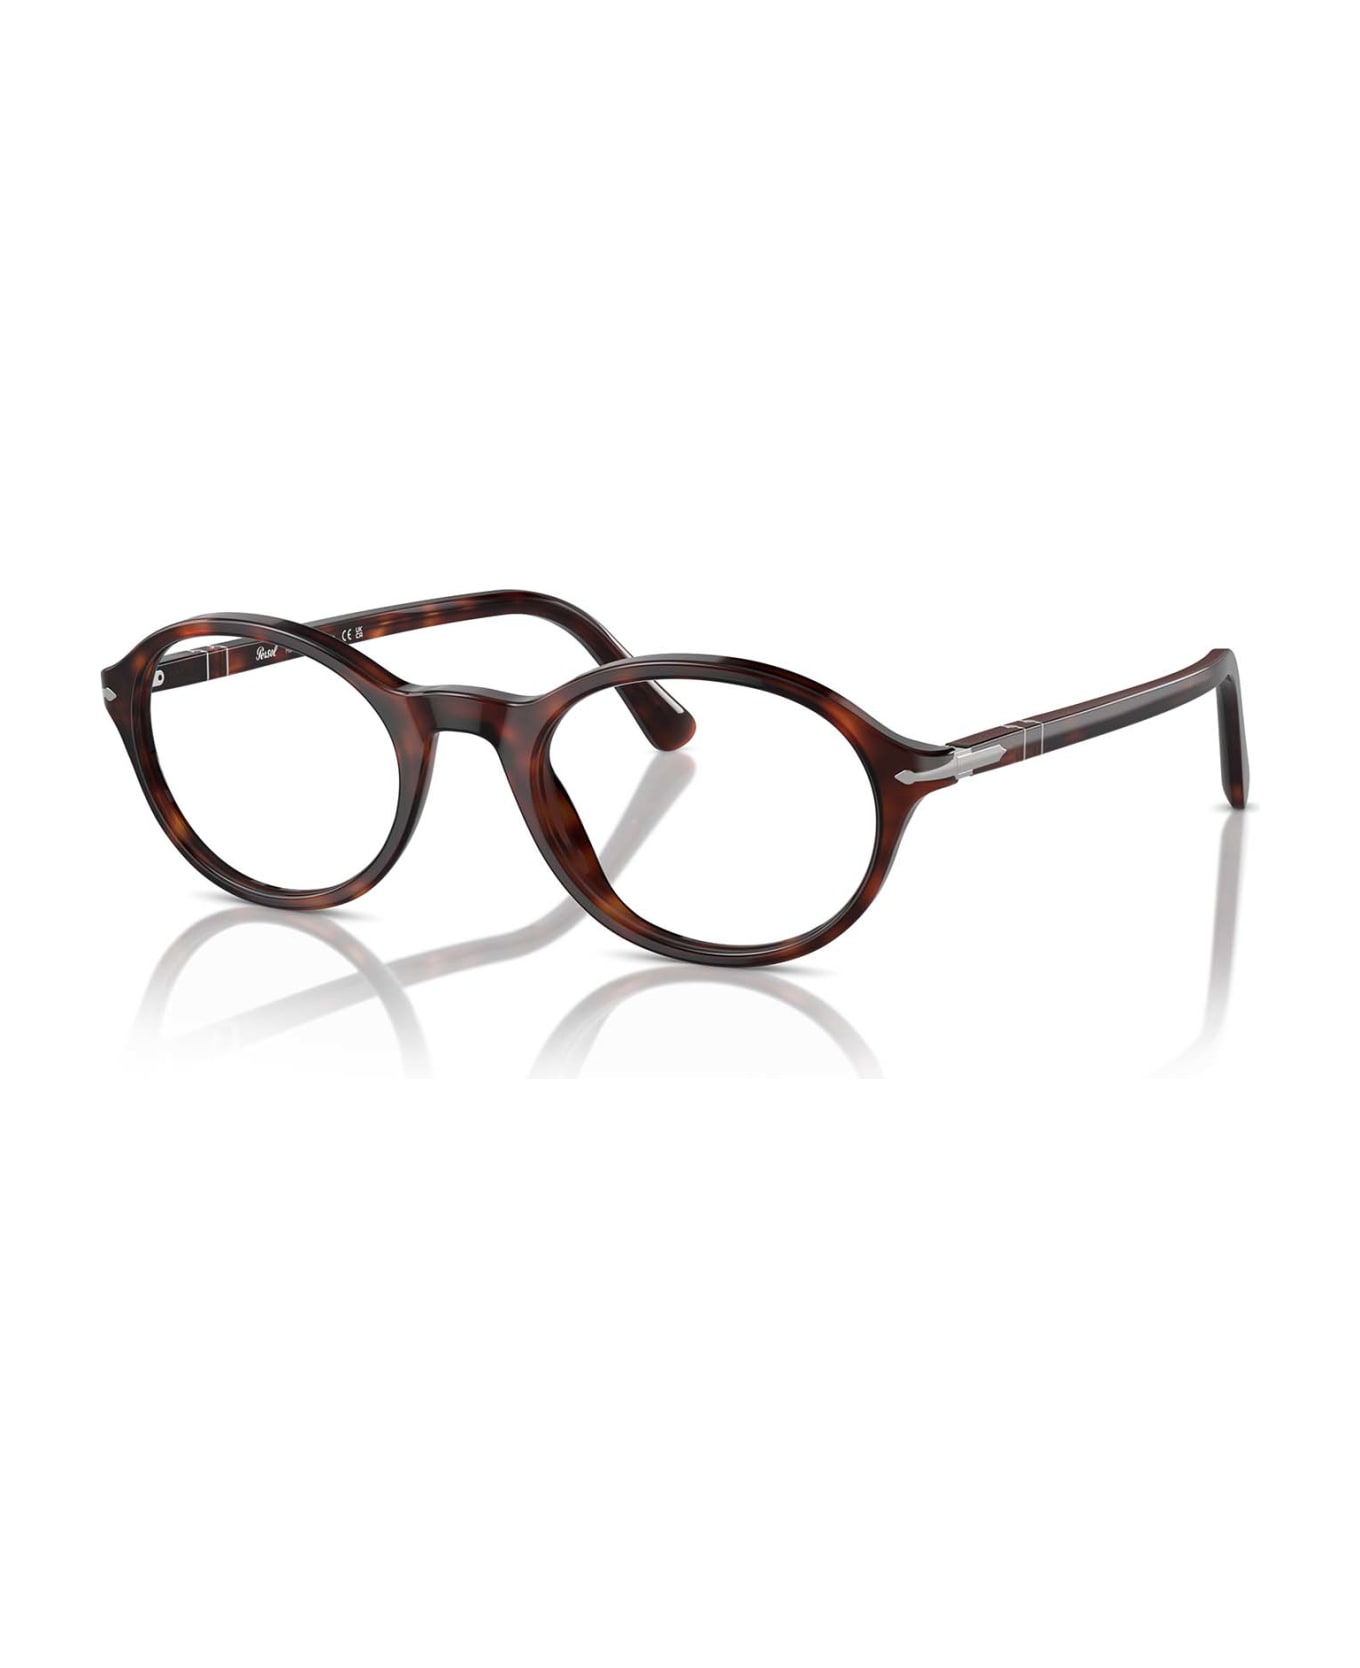 Persol Po3351v Havana Glasses - Havana アイウェア